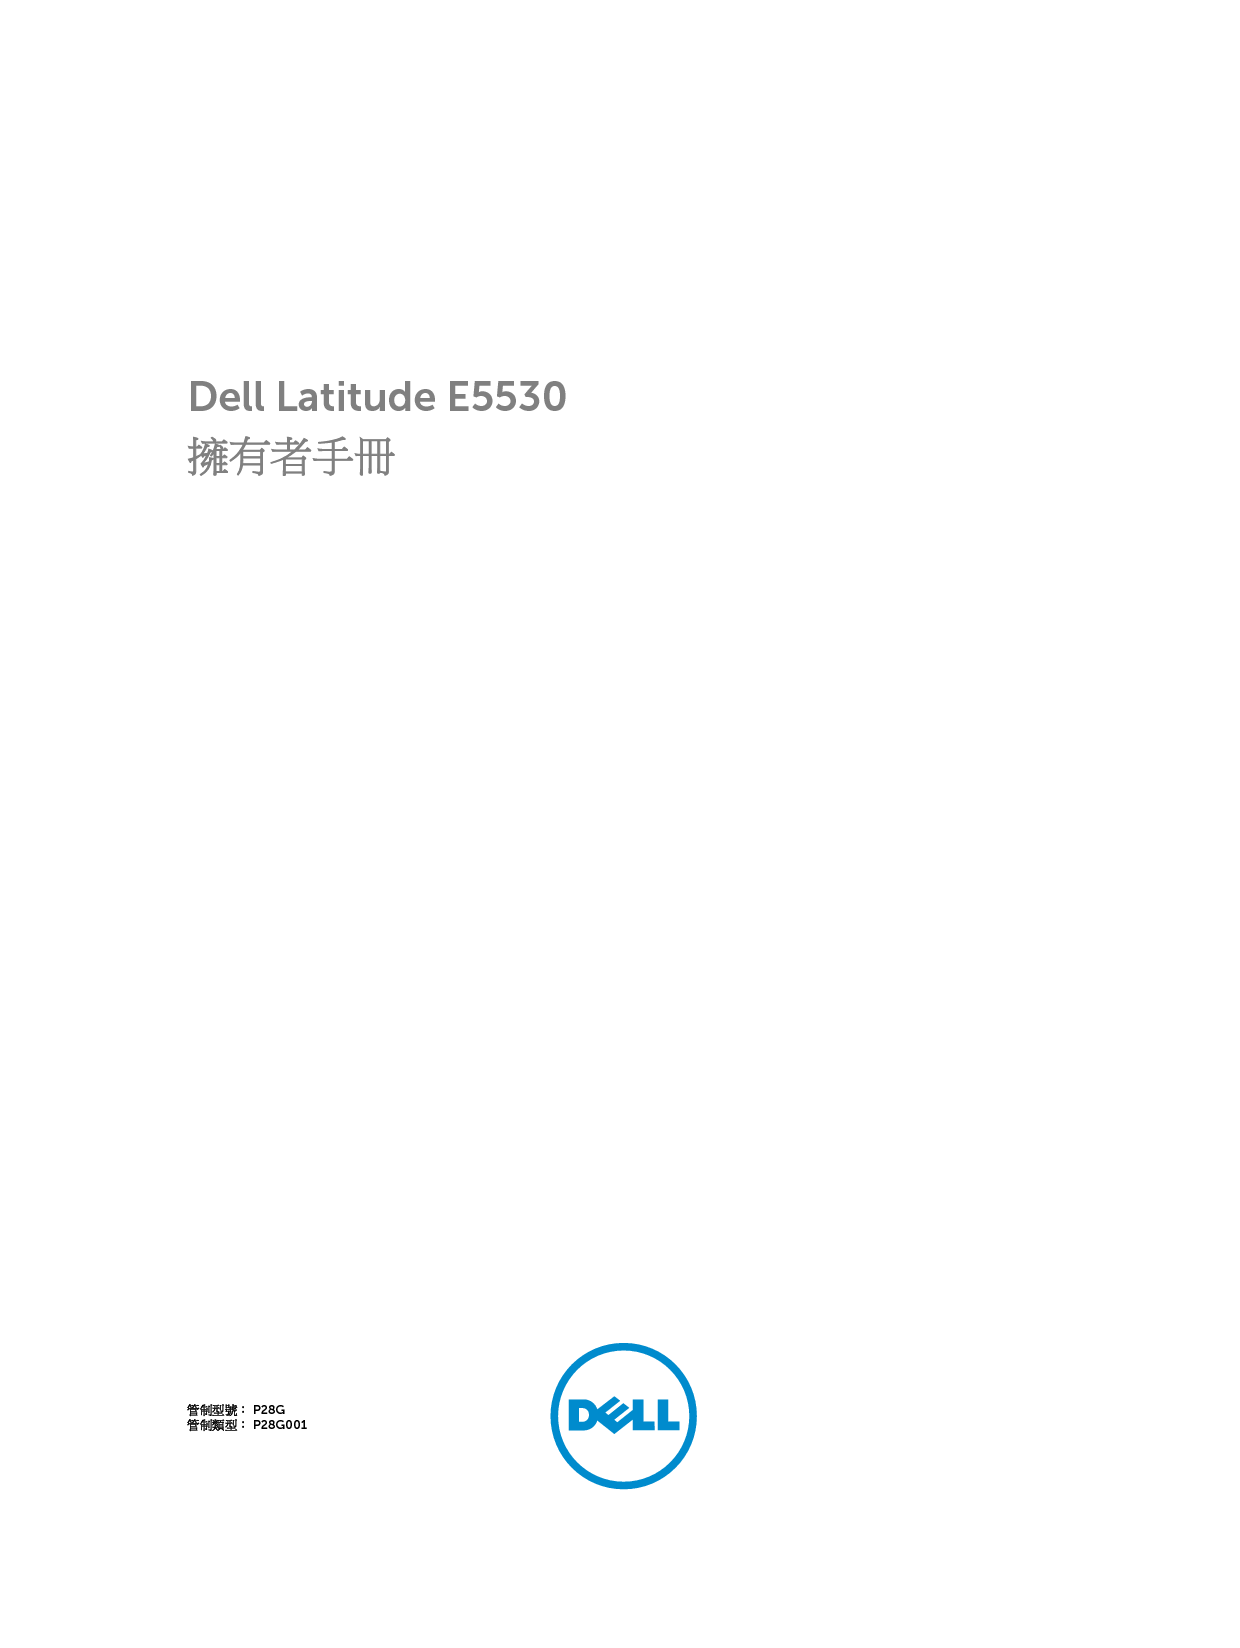 戴尔 Dell Latitude E5530 繁体 用户手册 封面